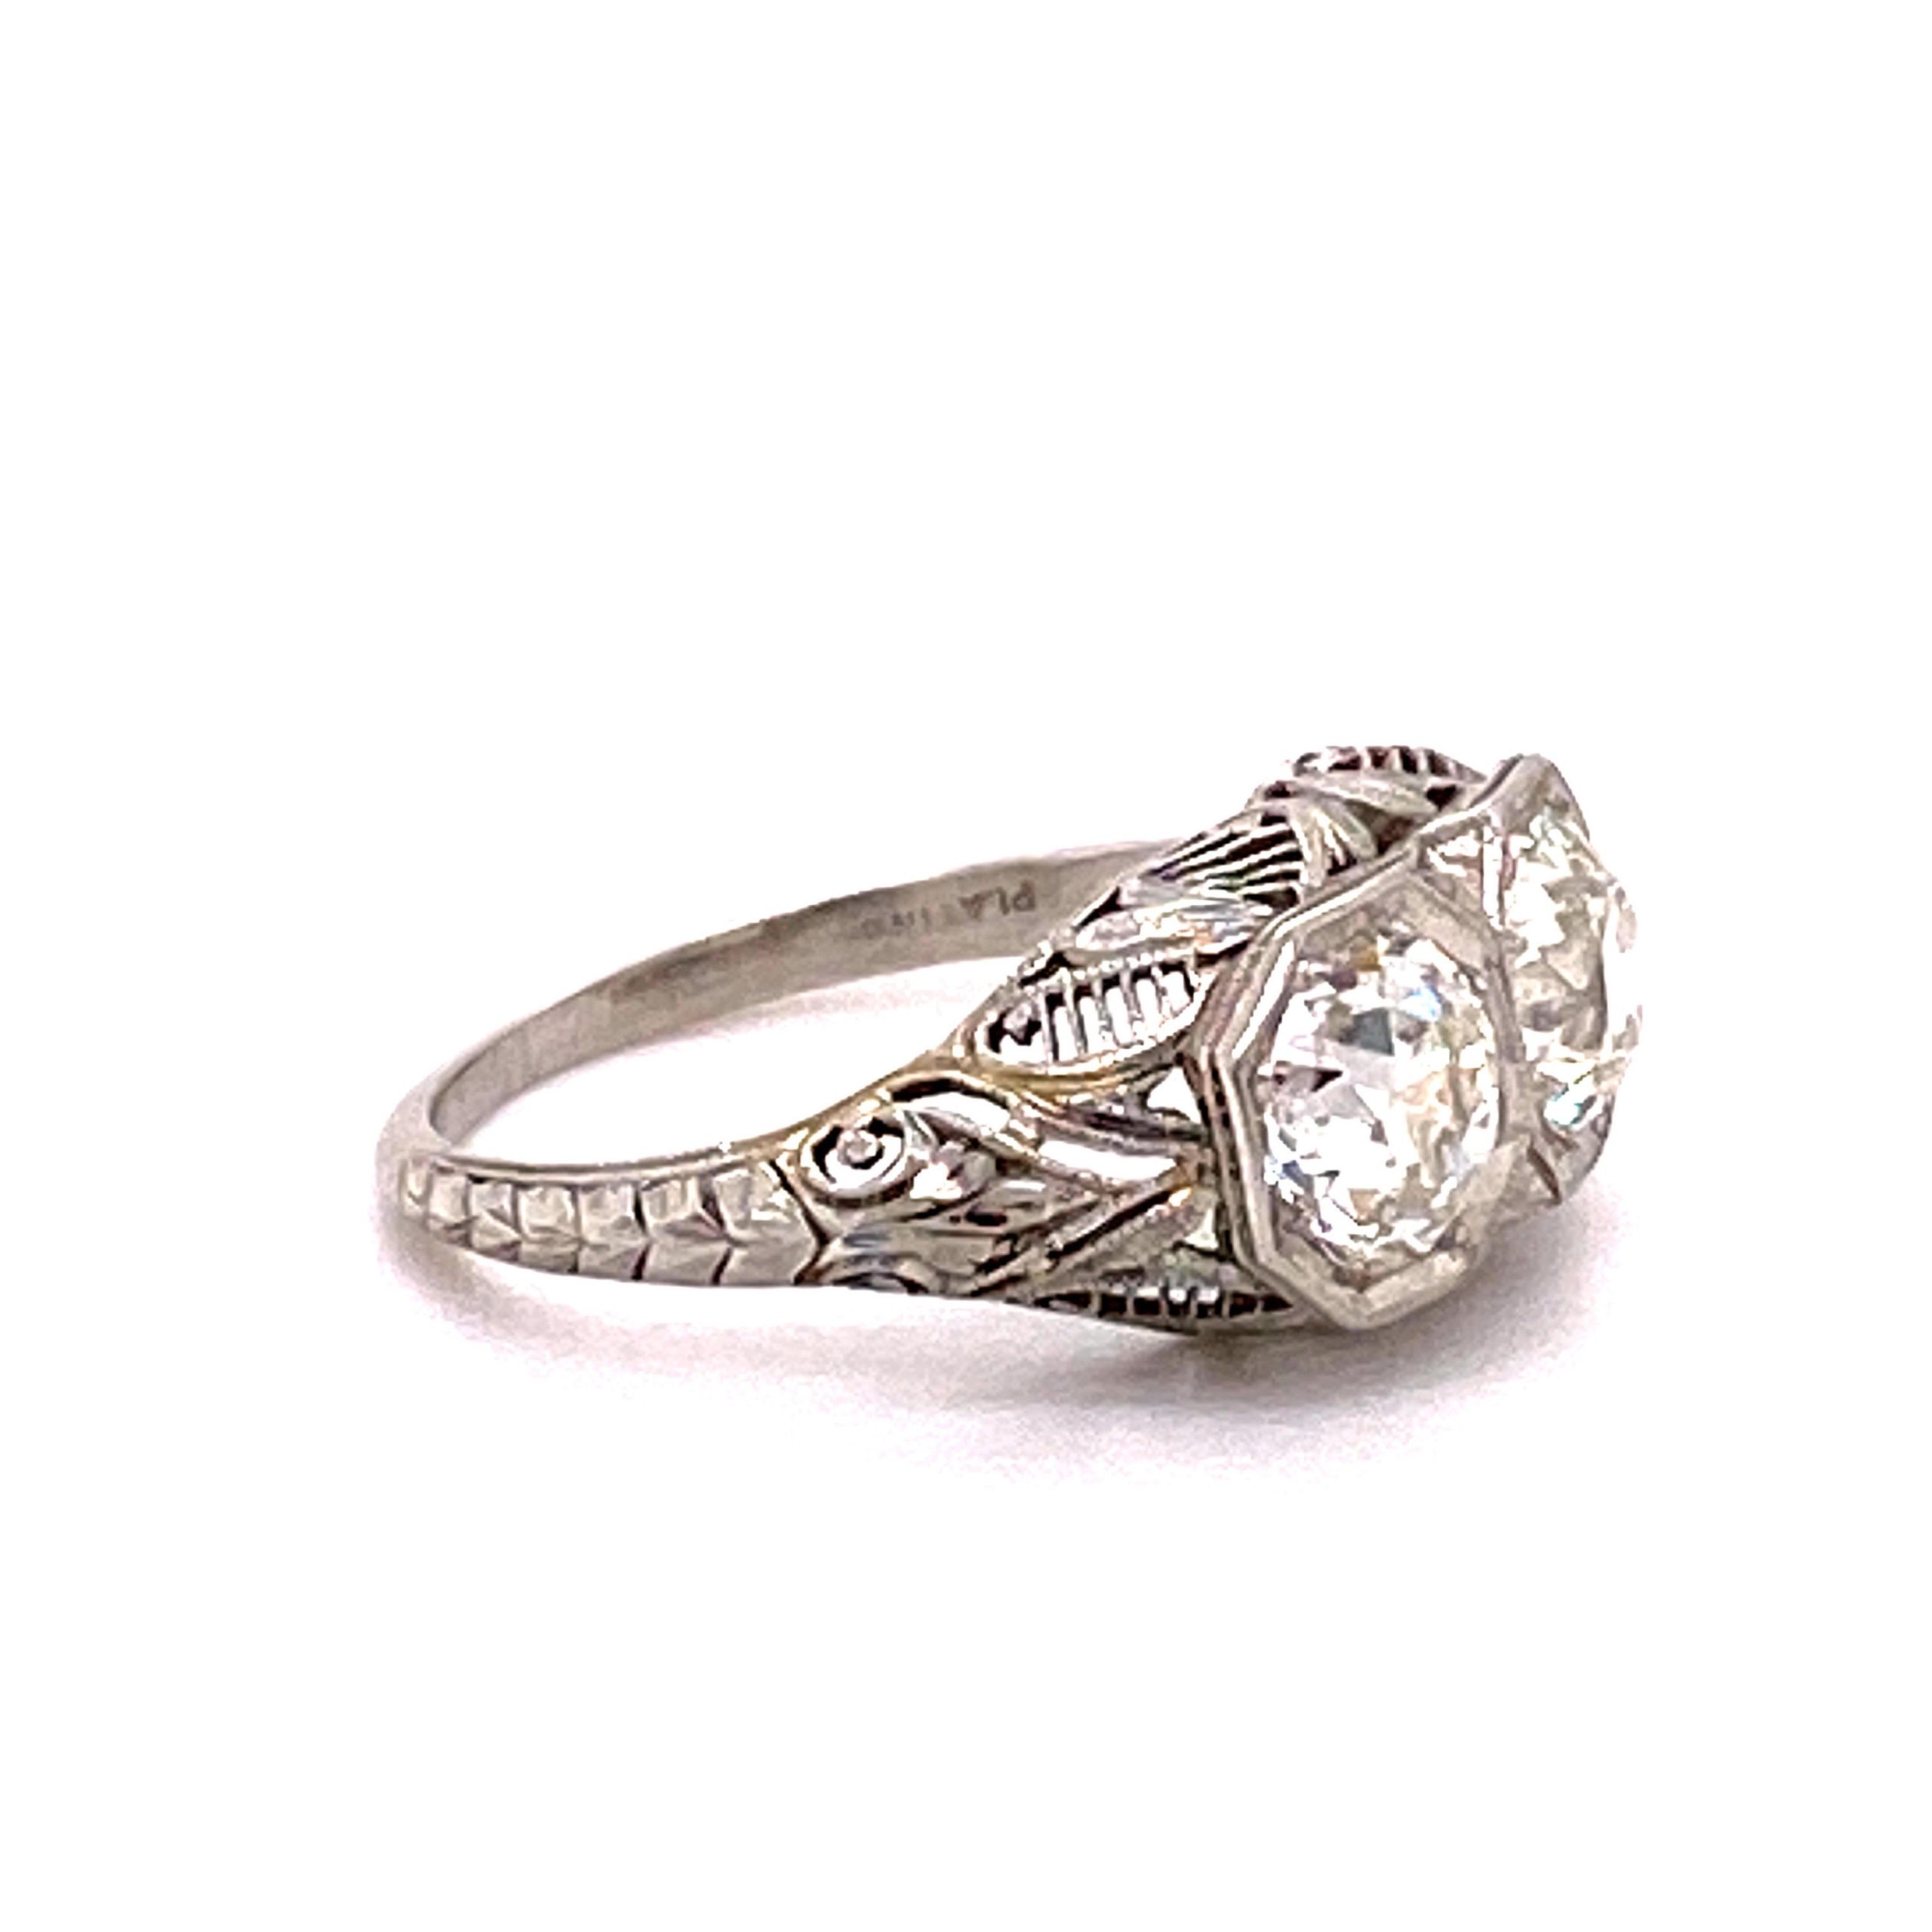 Antique Filigree Engagement Ring - .16ct Old European Cut Diamond Ring